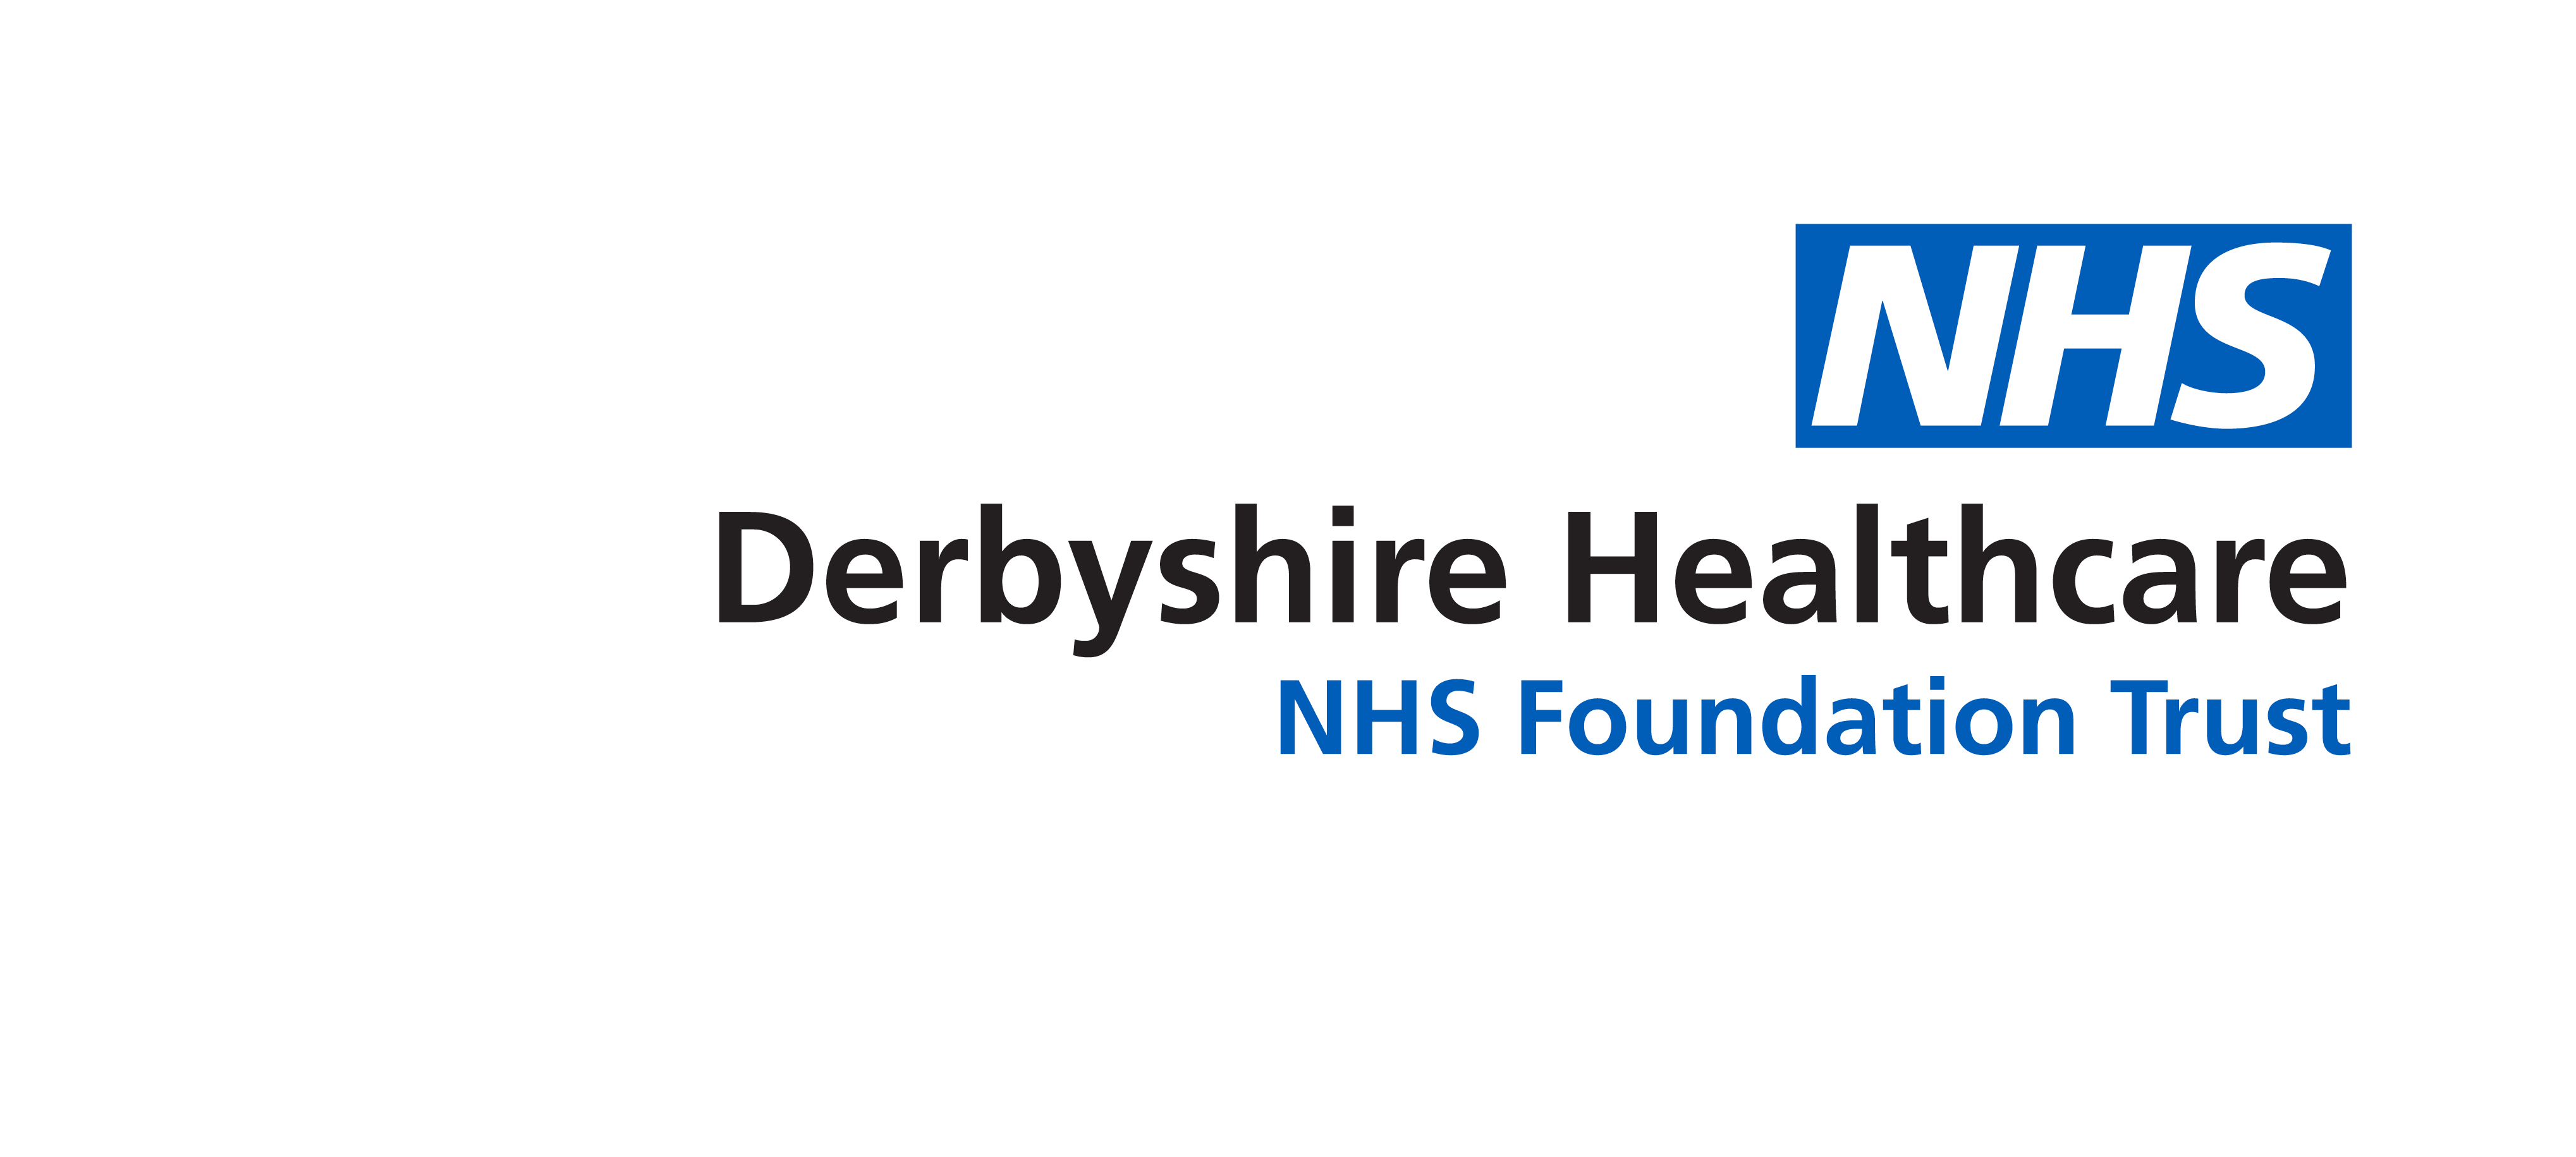 Statement on behalf of Derbyshire Healthcare NHS Trust - 9 April 2020